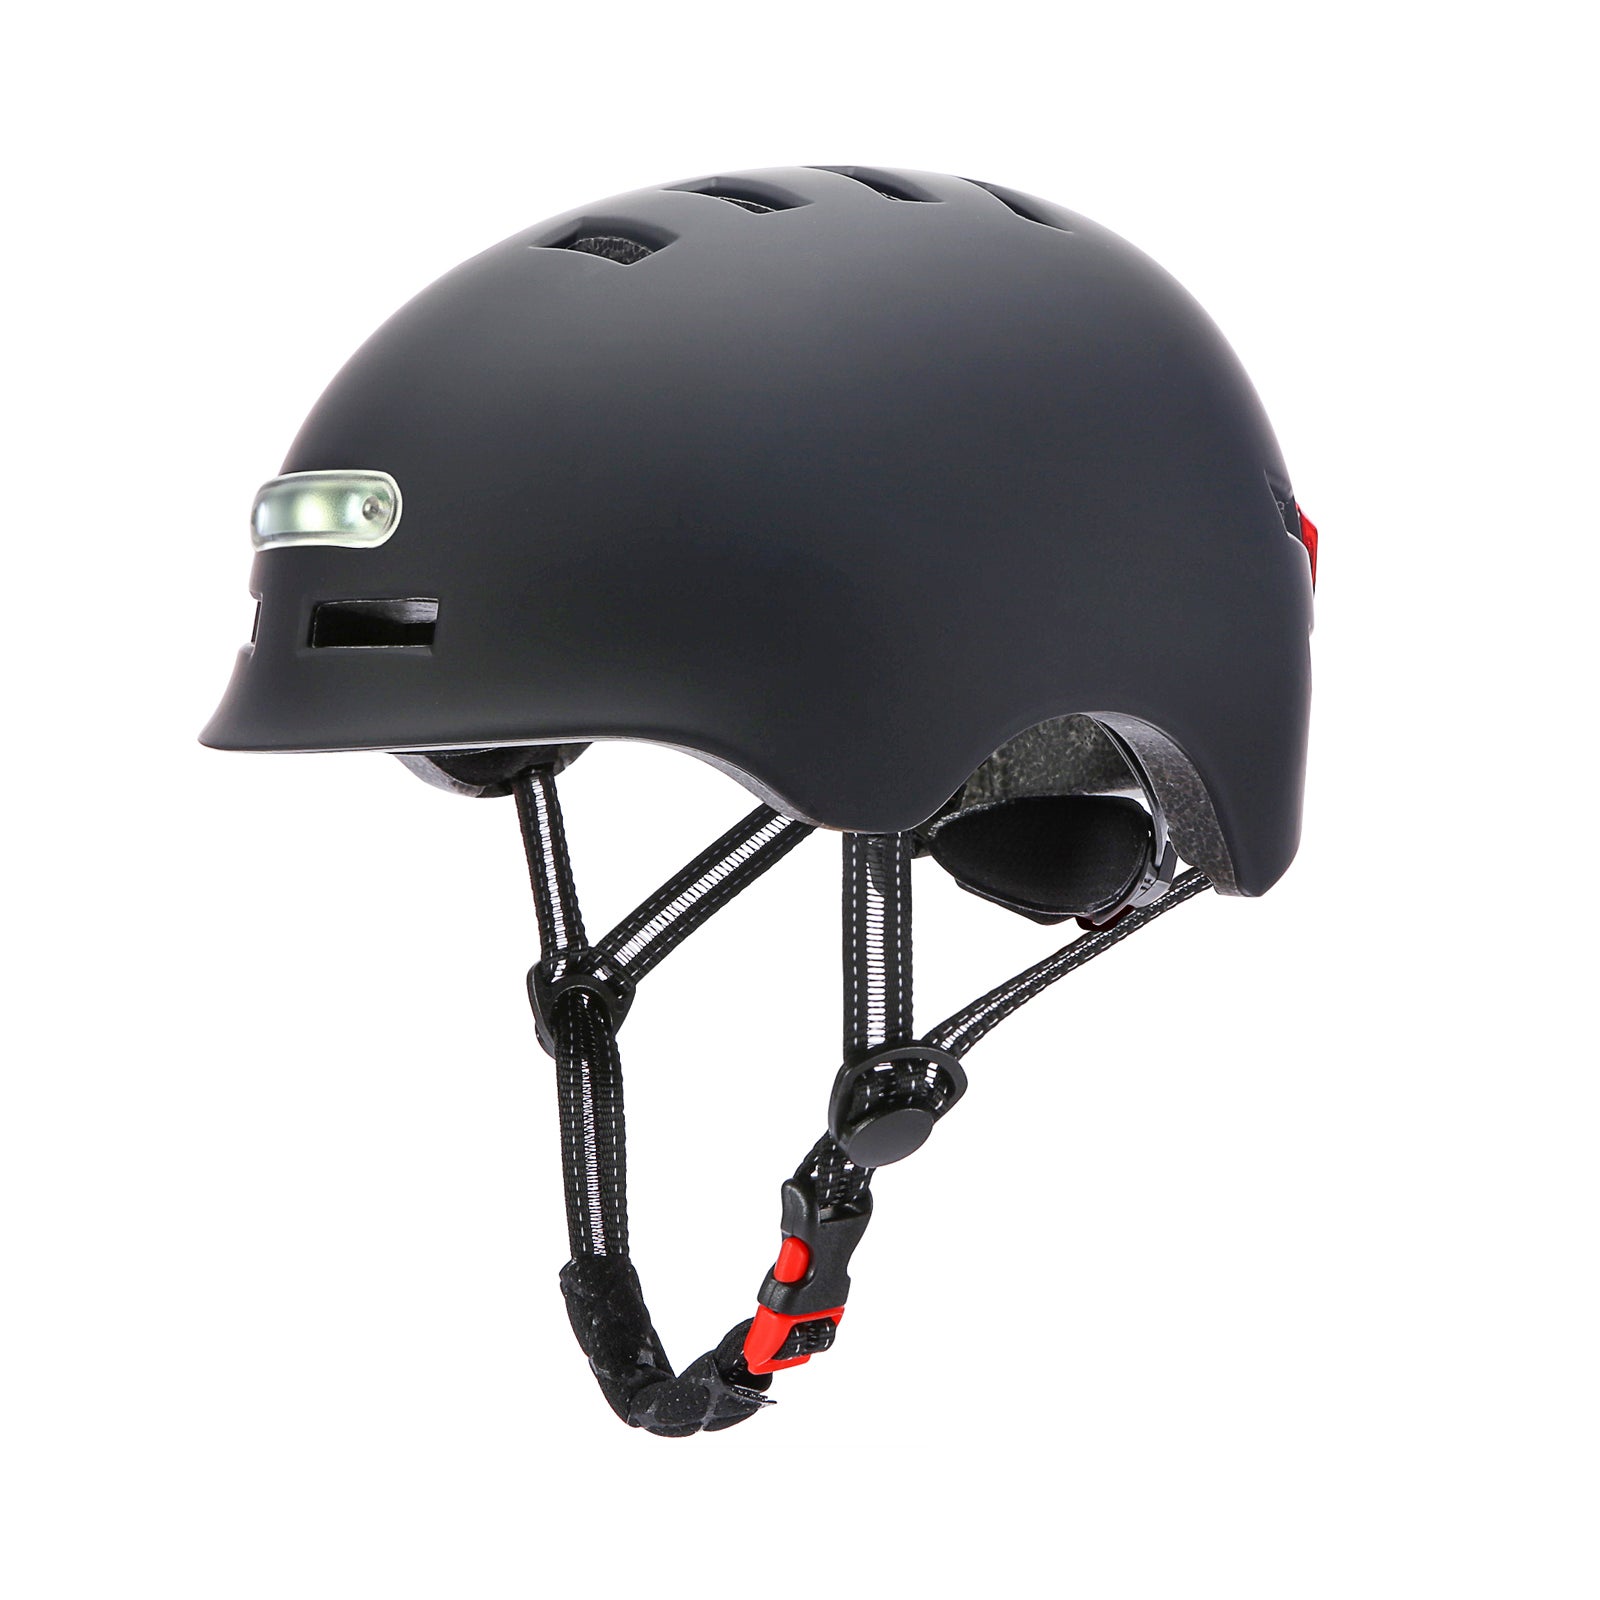 ACA L Size Black Smart Bike Cycling Bicycle Helmet Headlight Tail Warning Light Outdoor Sport